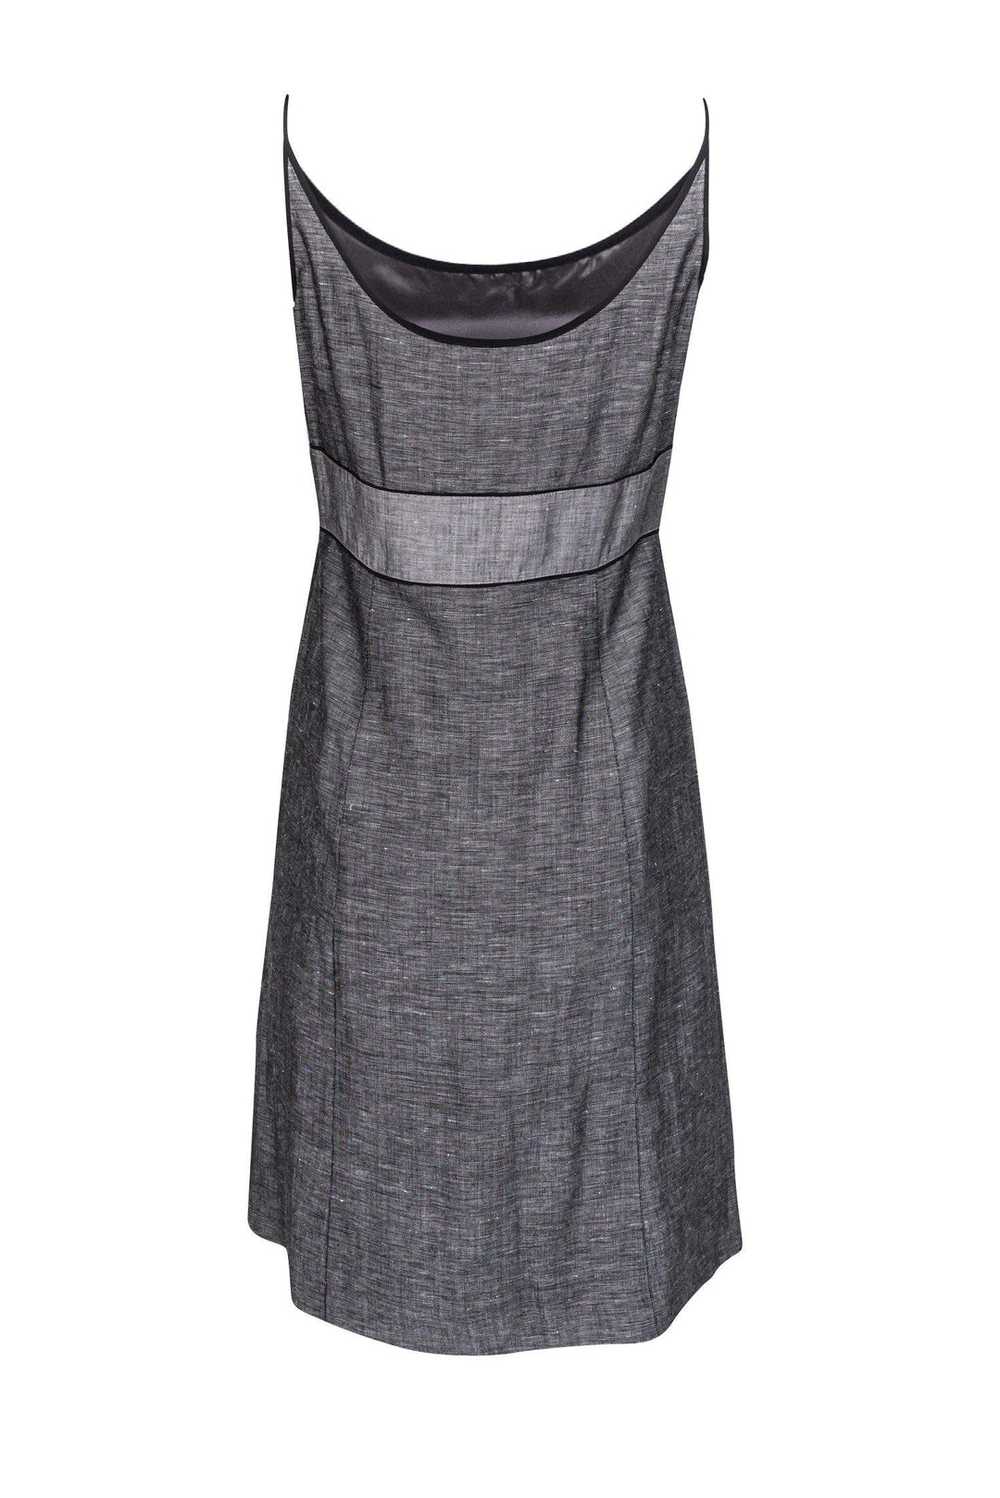 Narciso Rodriguez - Dark Gray & Black Tank Dress … - image 3